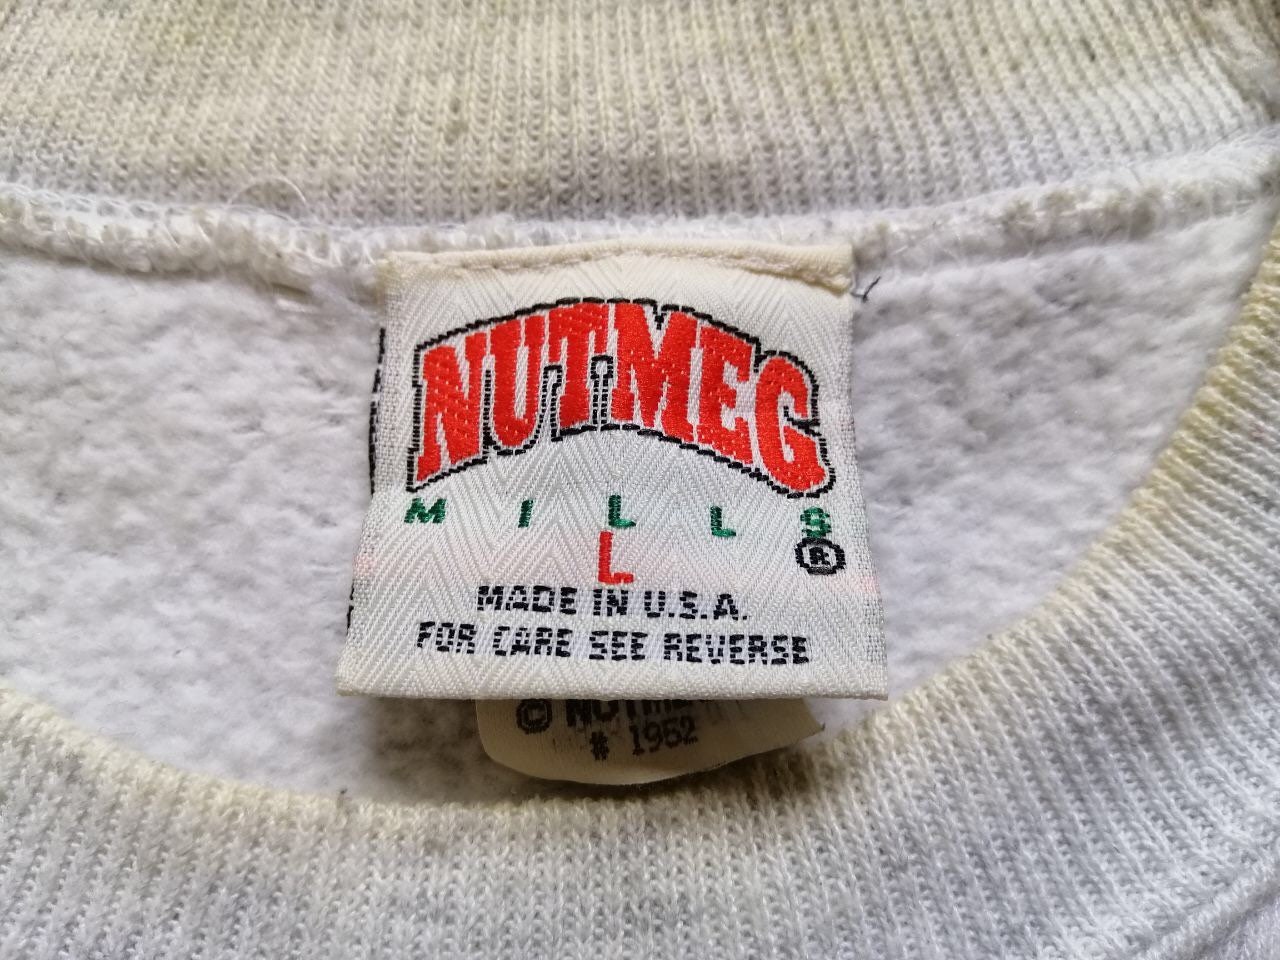 Vintage 90s Nutmeg LA Dodgers Nomo 16 Pullover Sweatshirt 